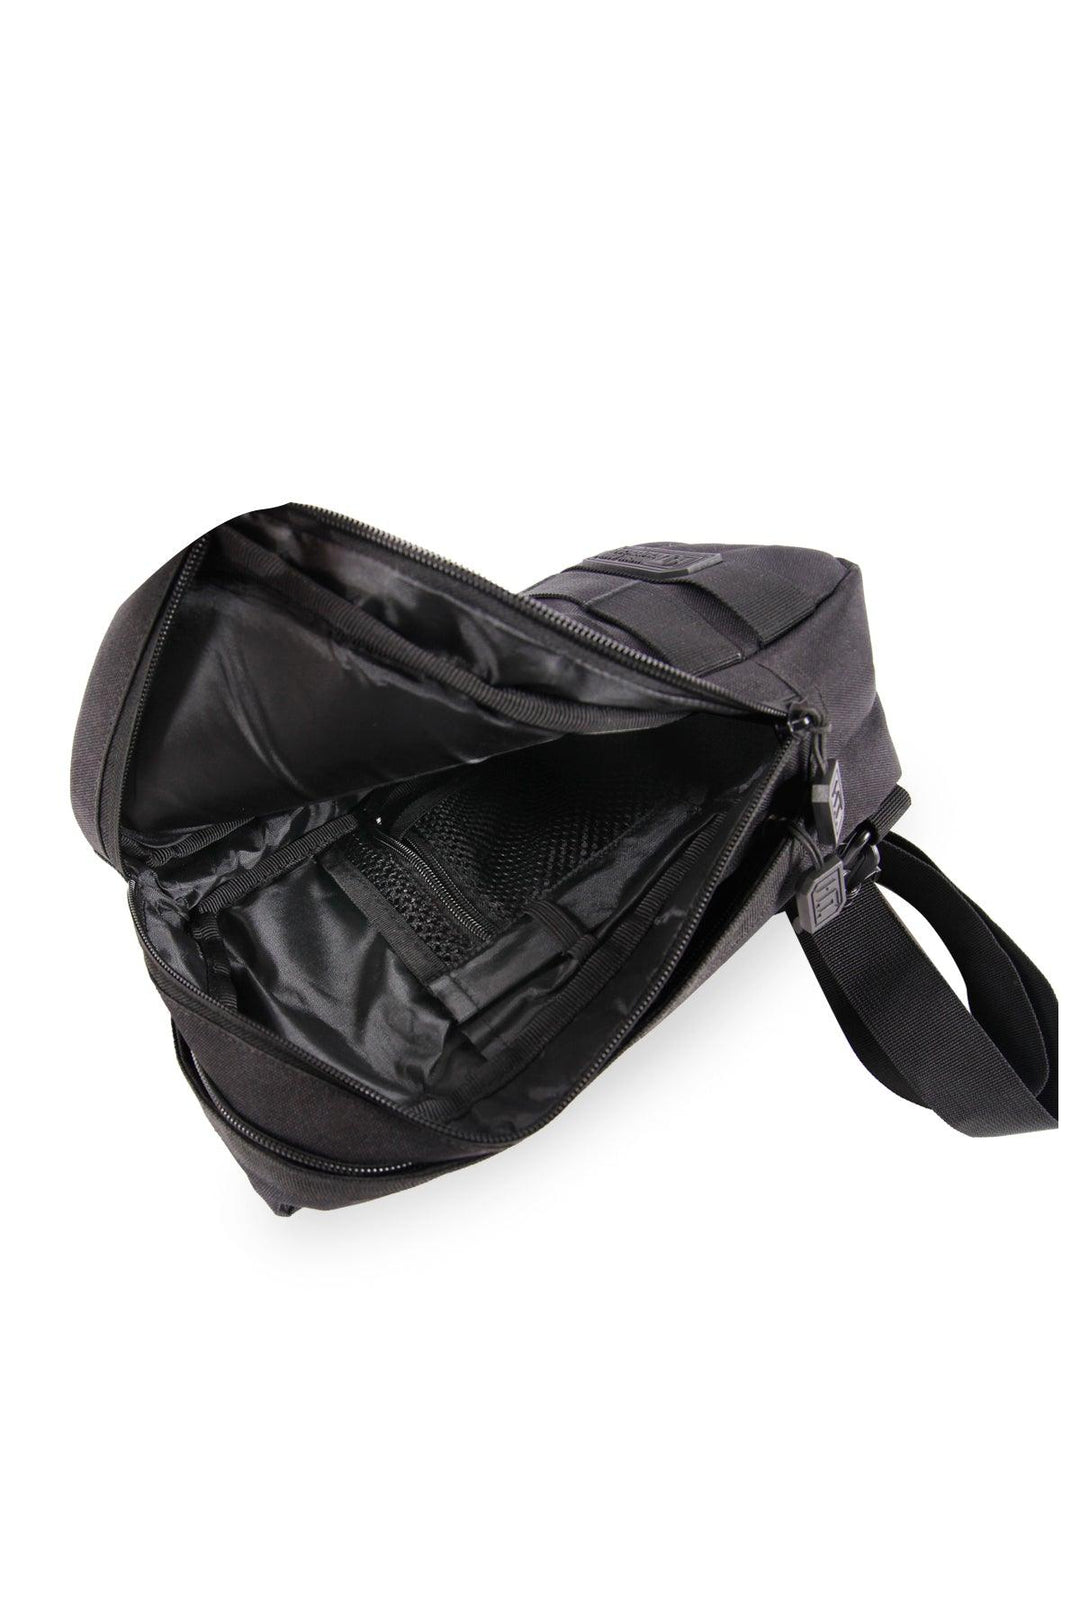 Torreya Sling Bag leather Sling Bag Large Sling Bag Womens Sling Bag Mens Sling  Bag Travel Sling Bag Hiking Sling Bag TSD Brand 